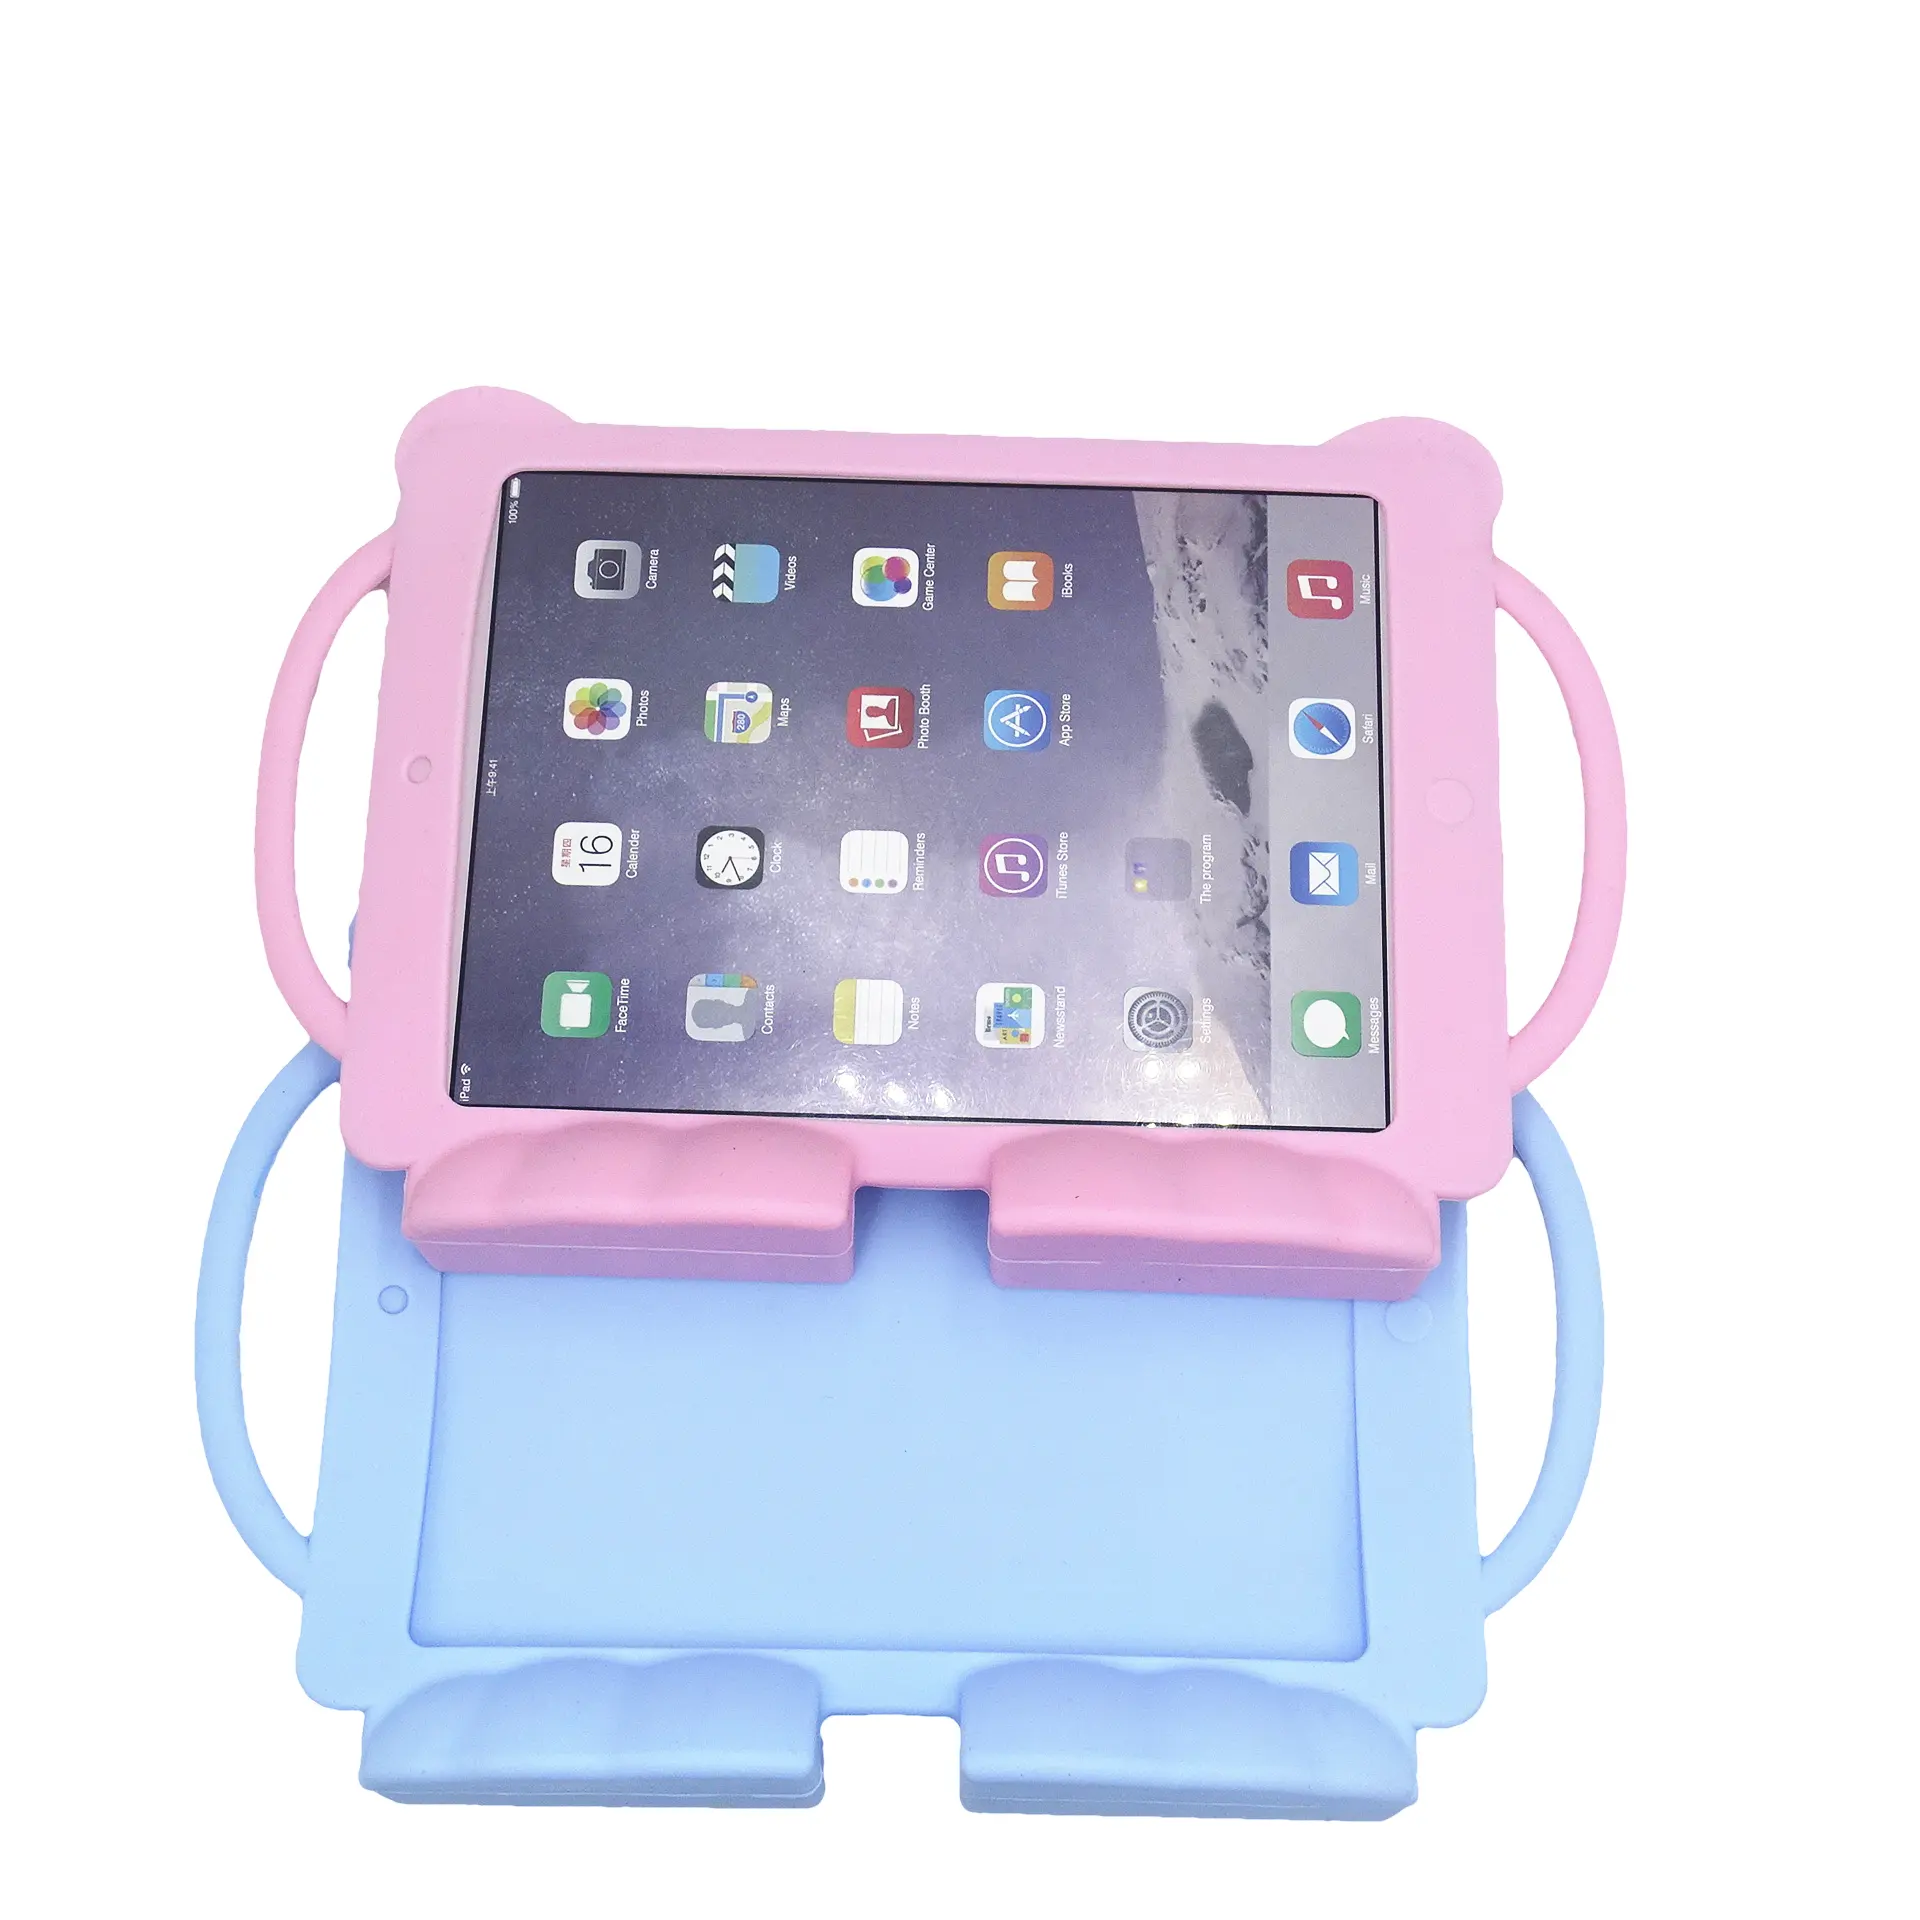 Profession elle Anpassung Tablet-Hüllen für Ipad Silikon-Tablet-Hüllen Hüllen für Kinder Universal-Tablet-Hülle